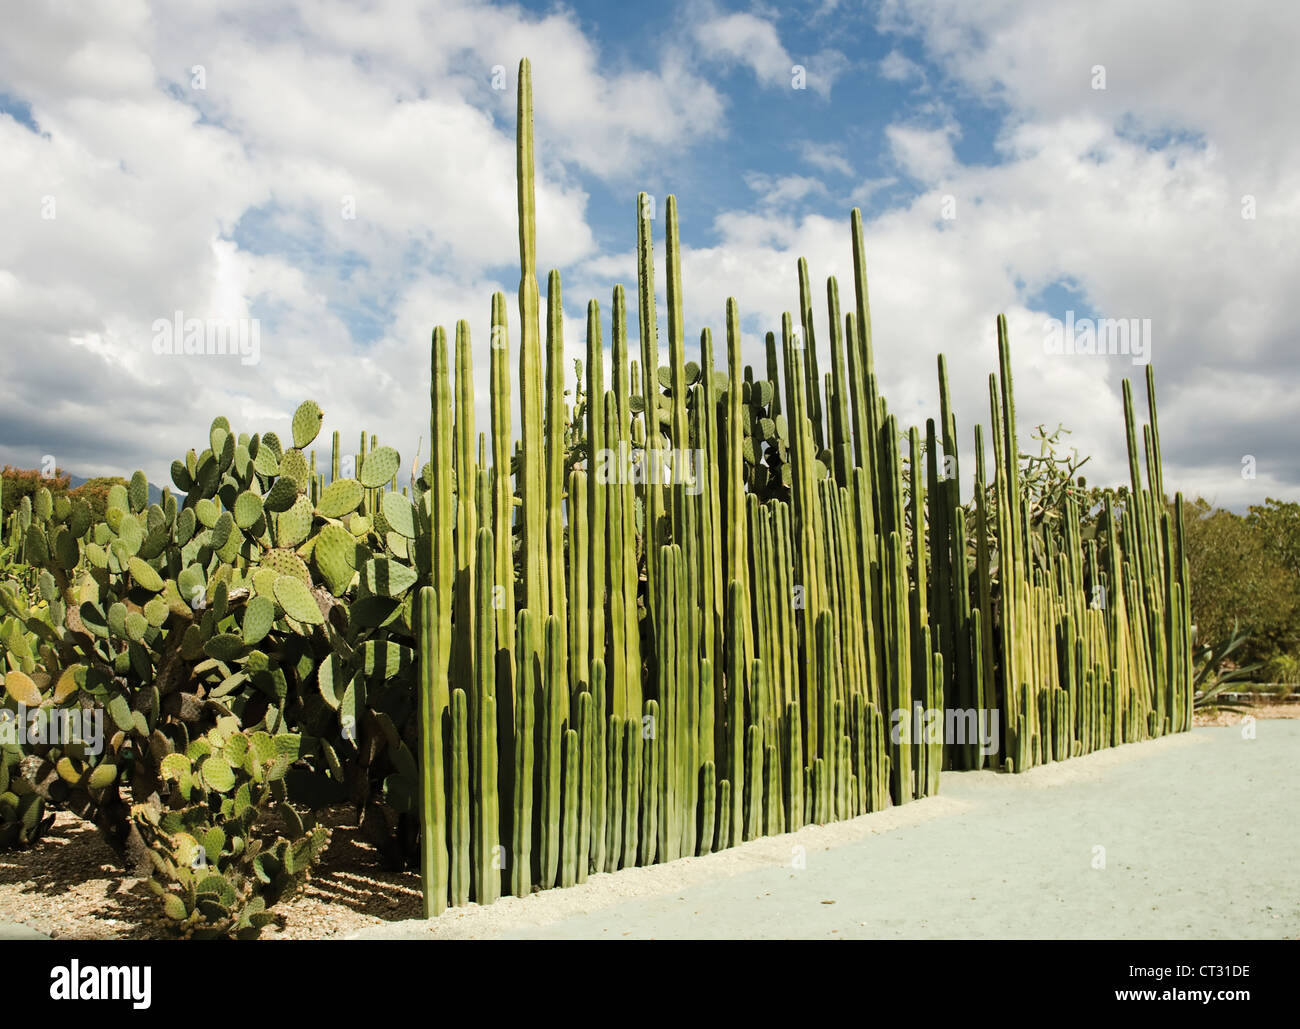 Pachycereus Marginatus, Cactus, Tall upright Mexican fence post cactus in front Prickly pear cactus, Opuntia palmadora. Stock Photo